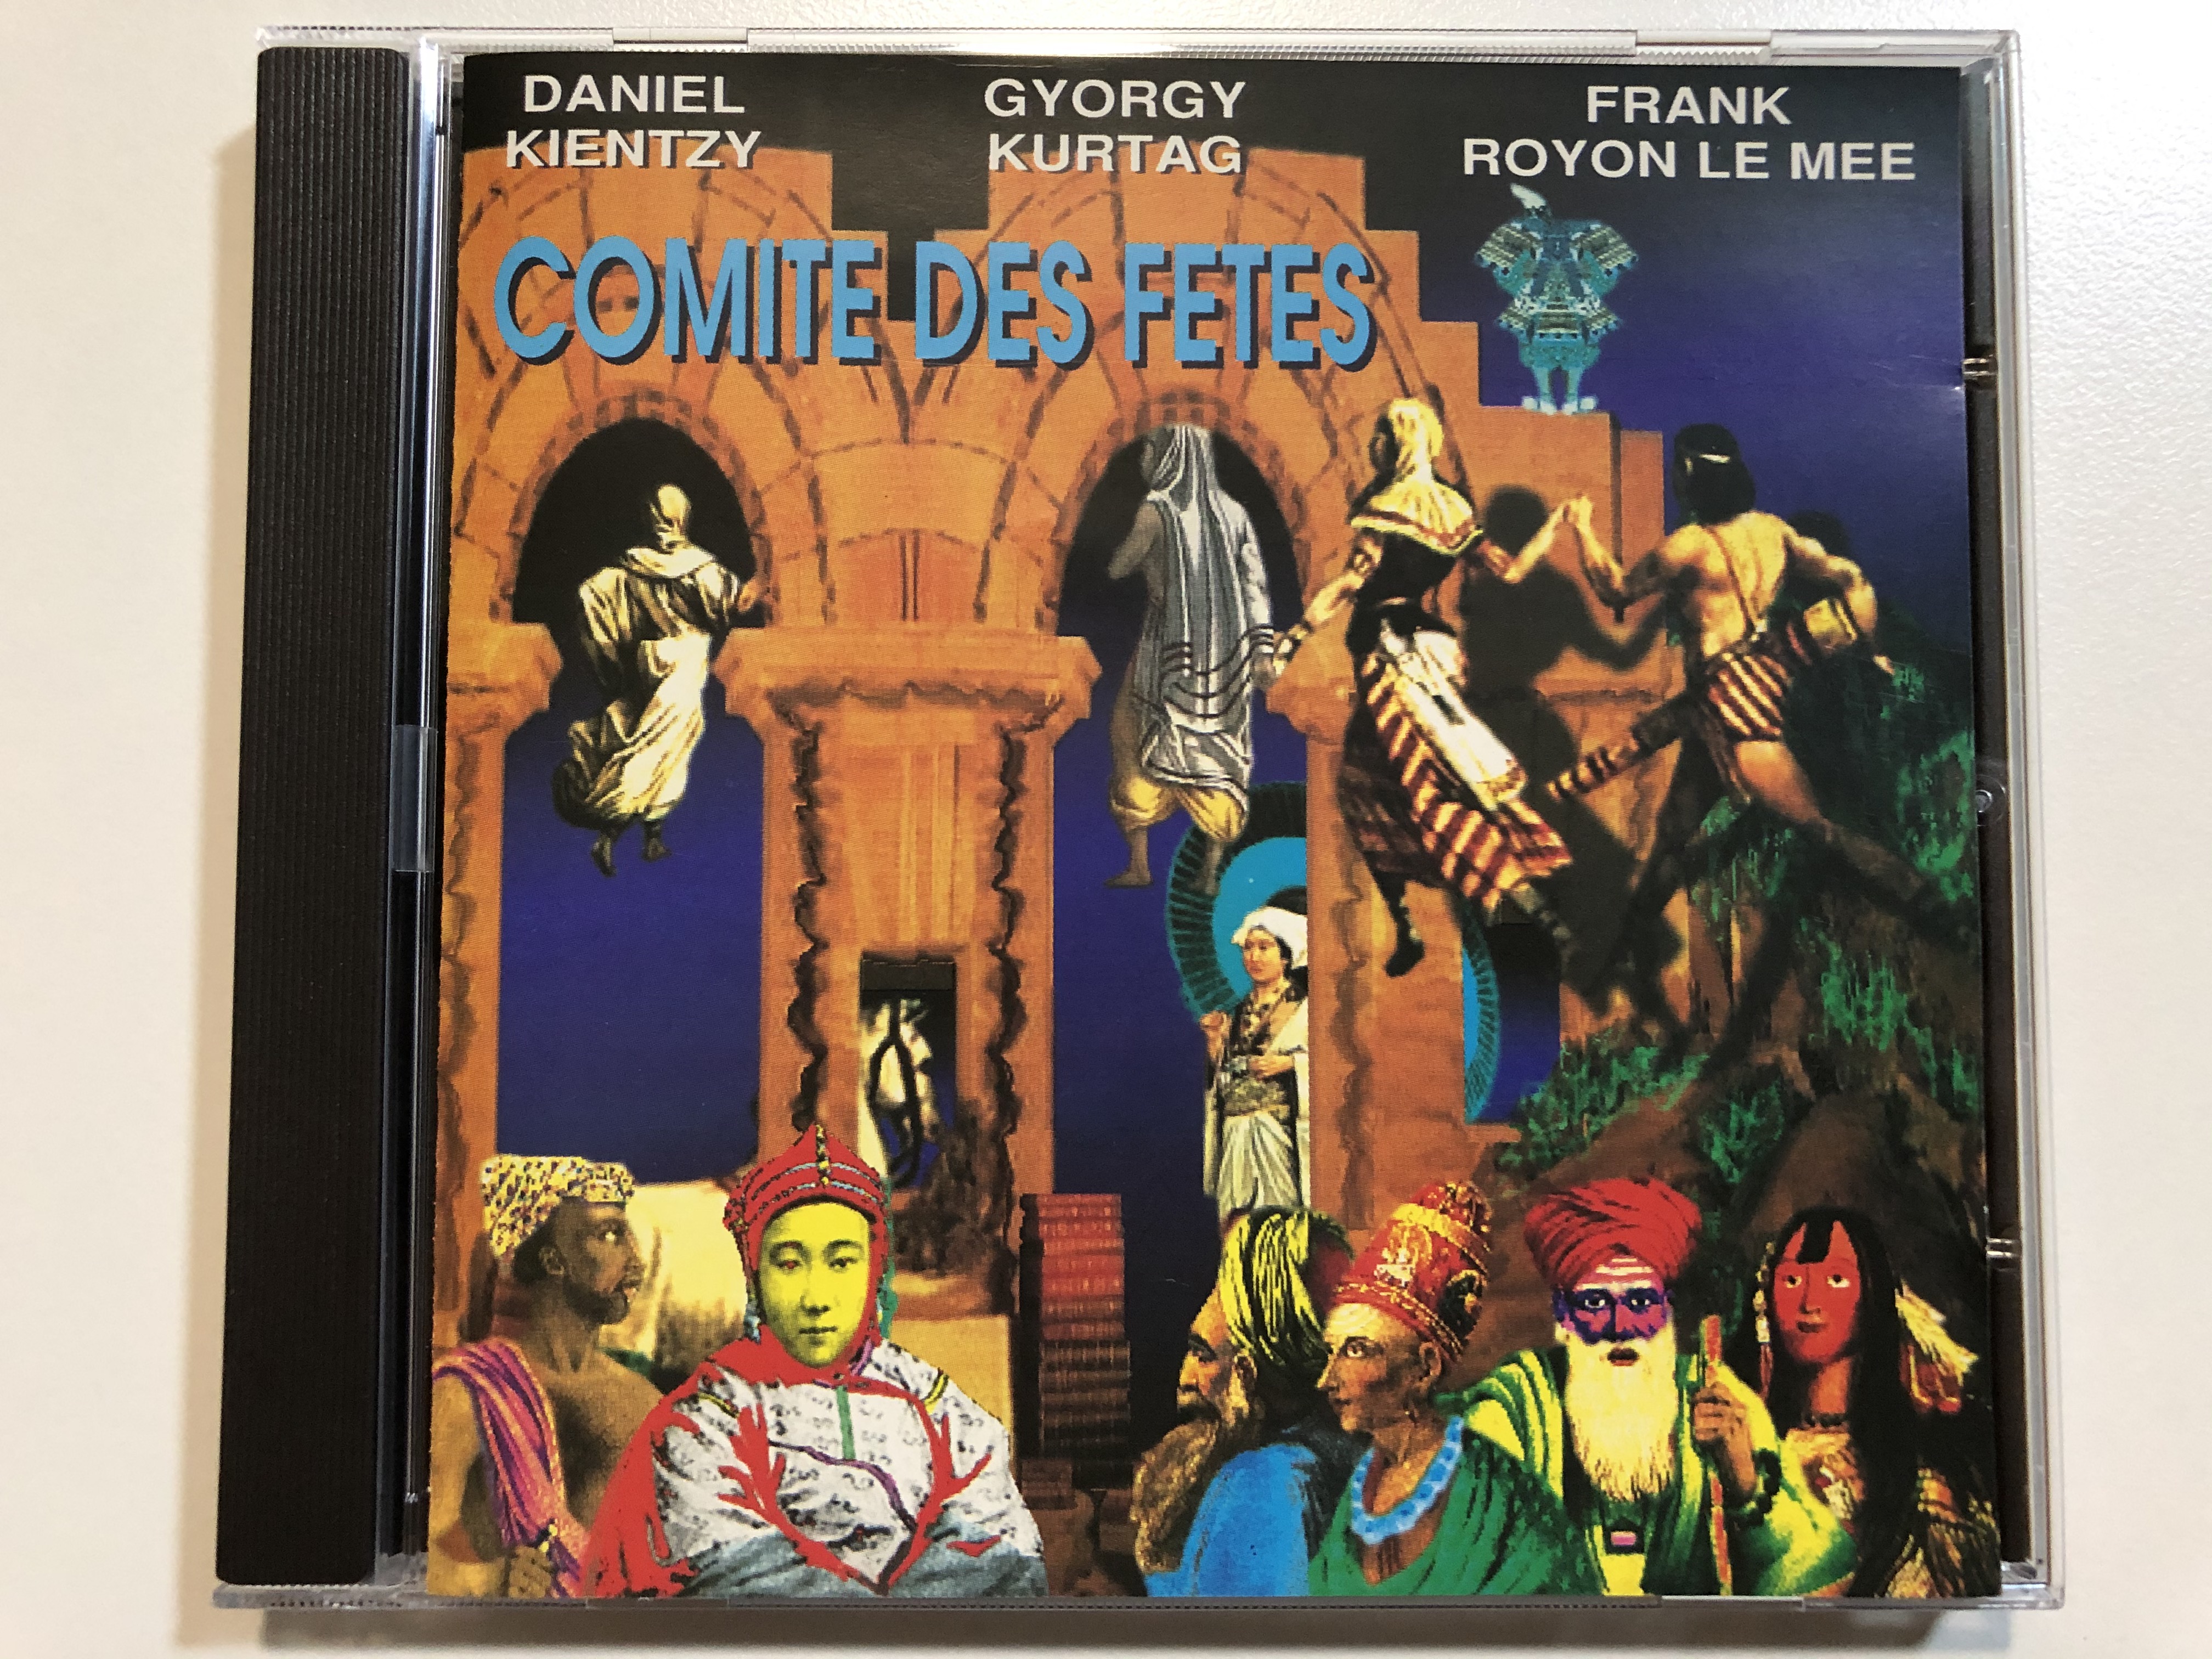 comite-des-fetes-daniel-kientzy-gyorgy-kurtag-frank-royon-le-mee-krk-music-audio-cd-1990-krk-751-1-.jpg